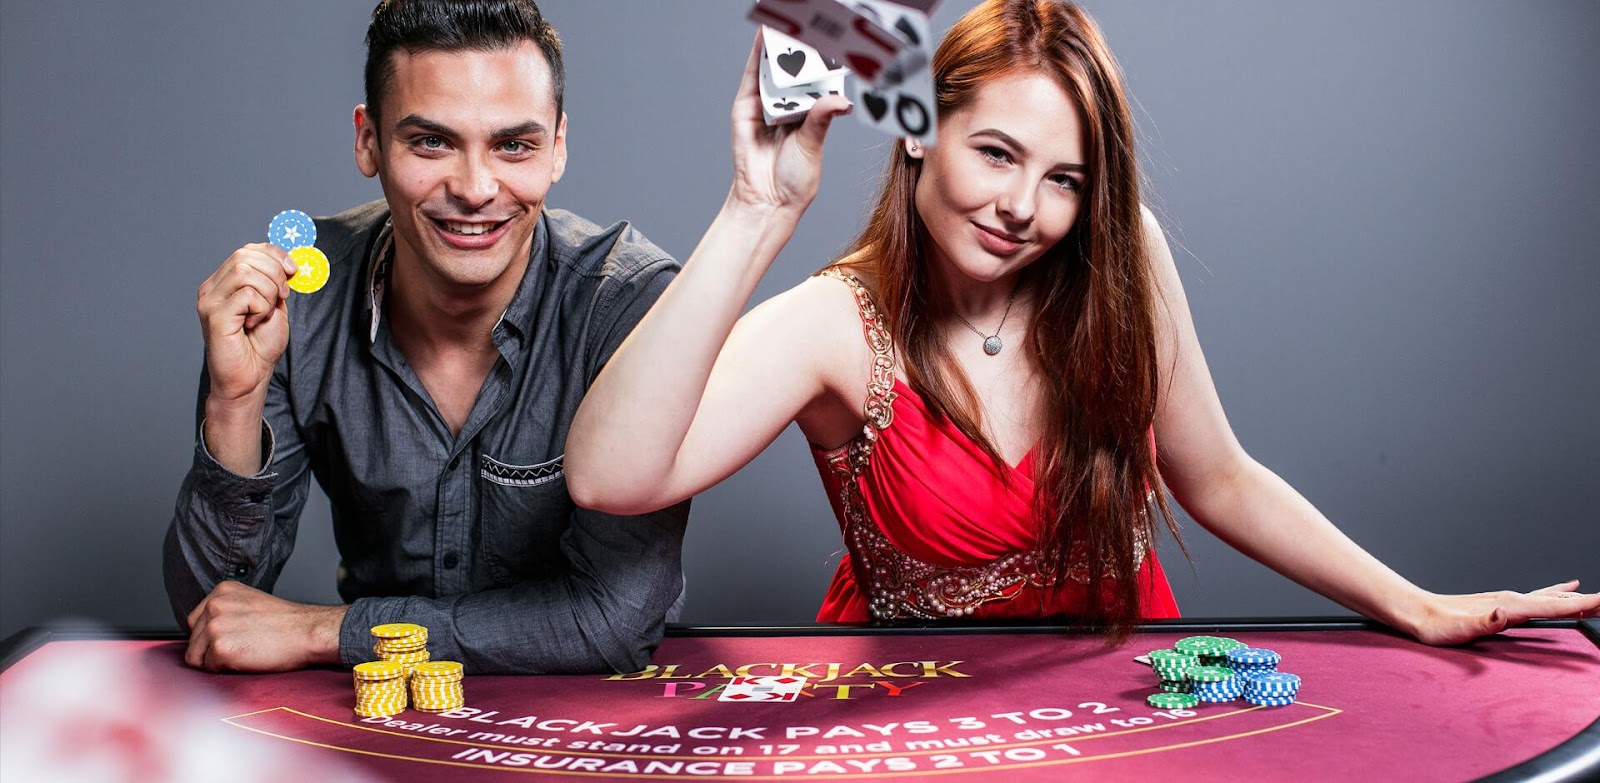 Live Dealer Casino Solution, live casino software provider